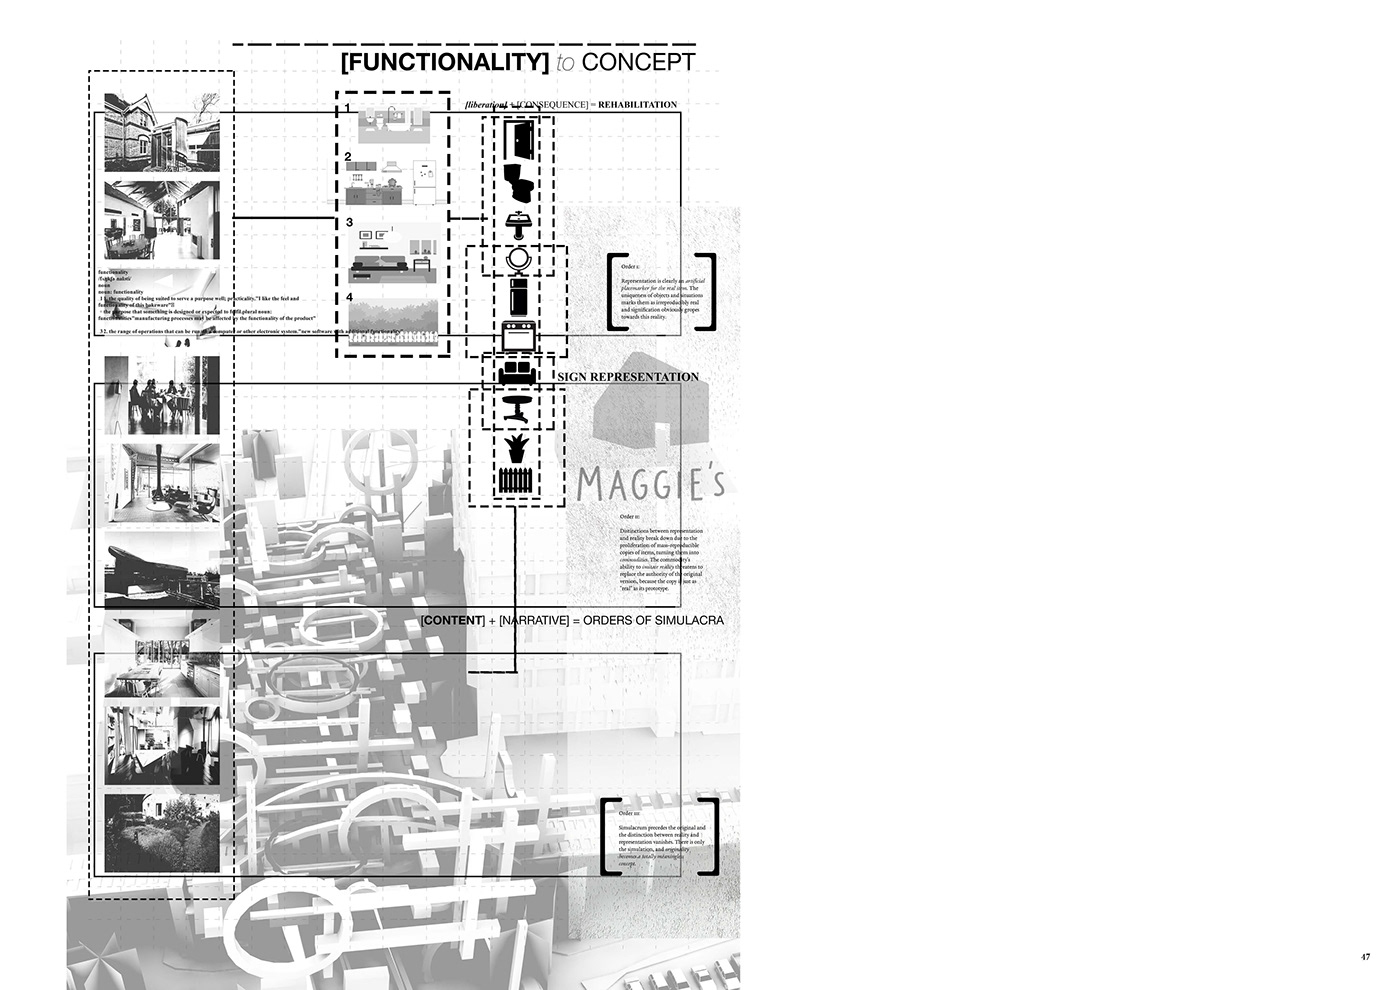 Technology architecture design simulation concept transcript simulacra baudrillard